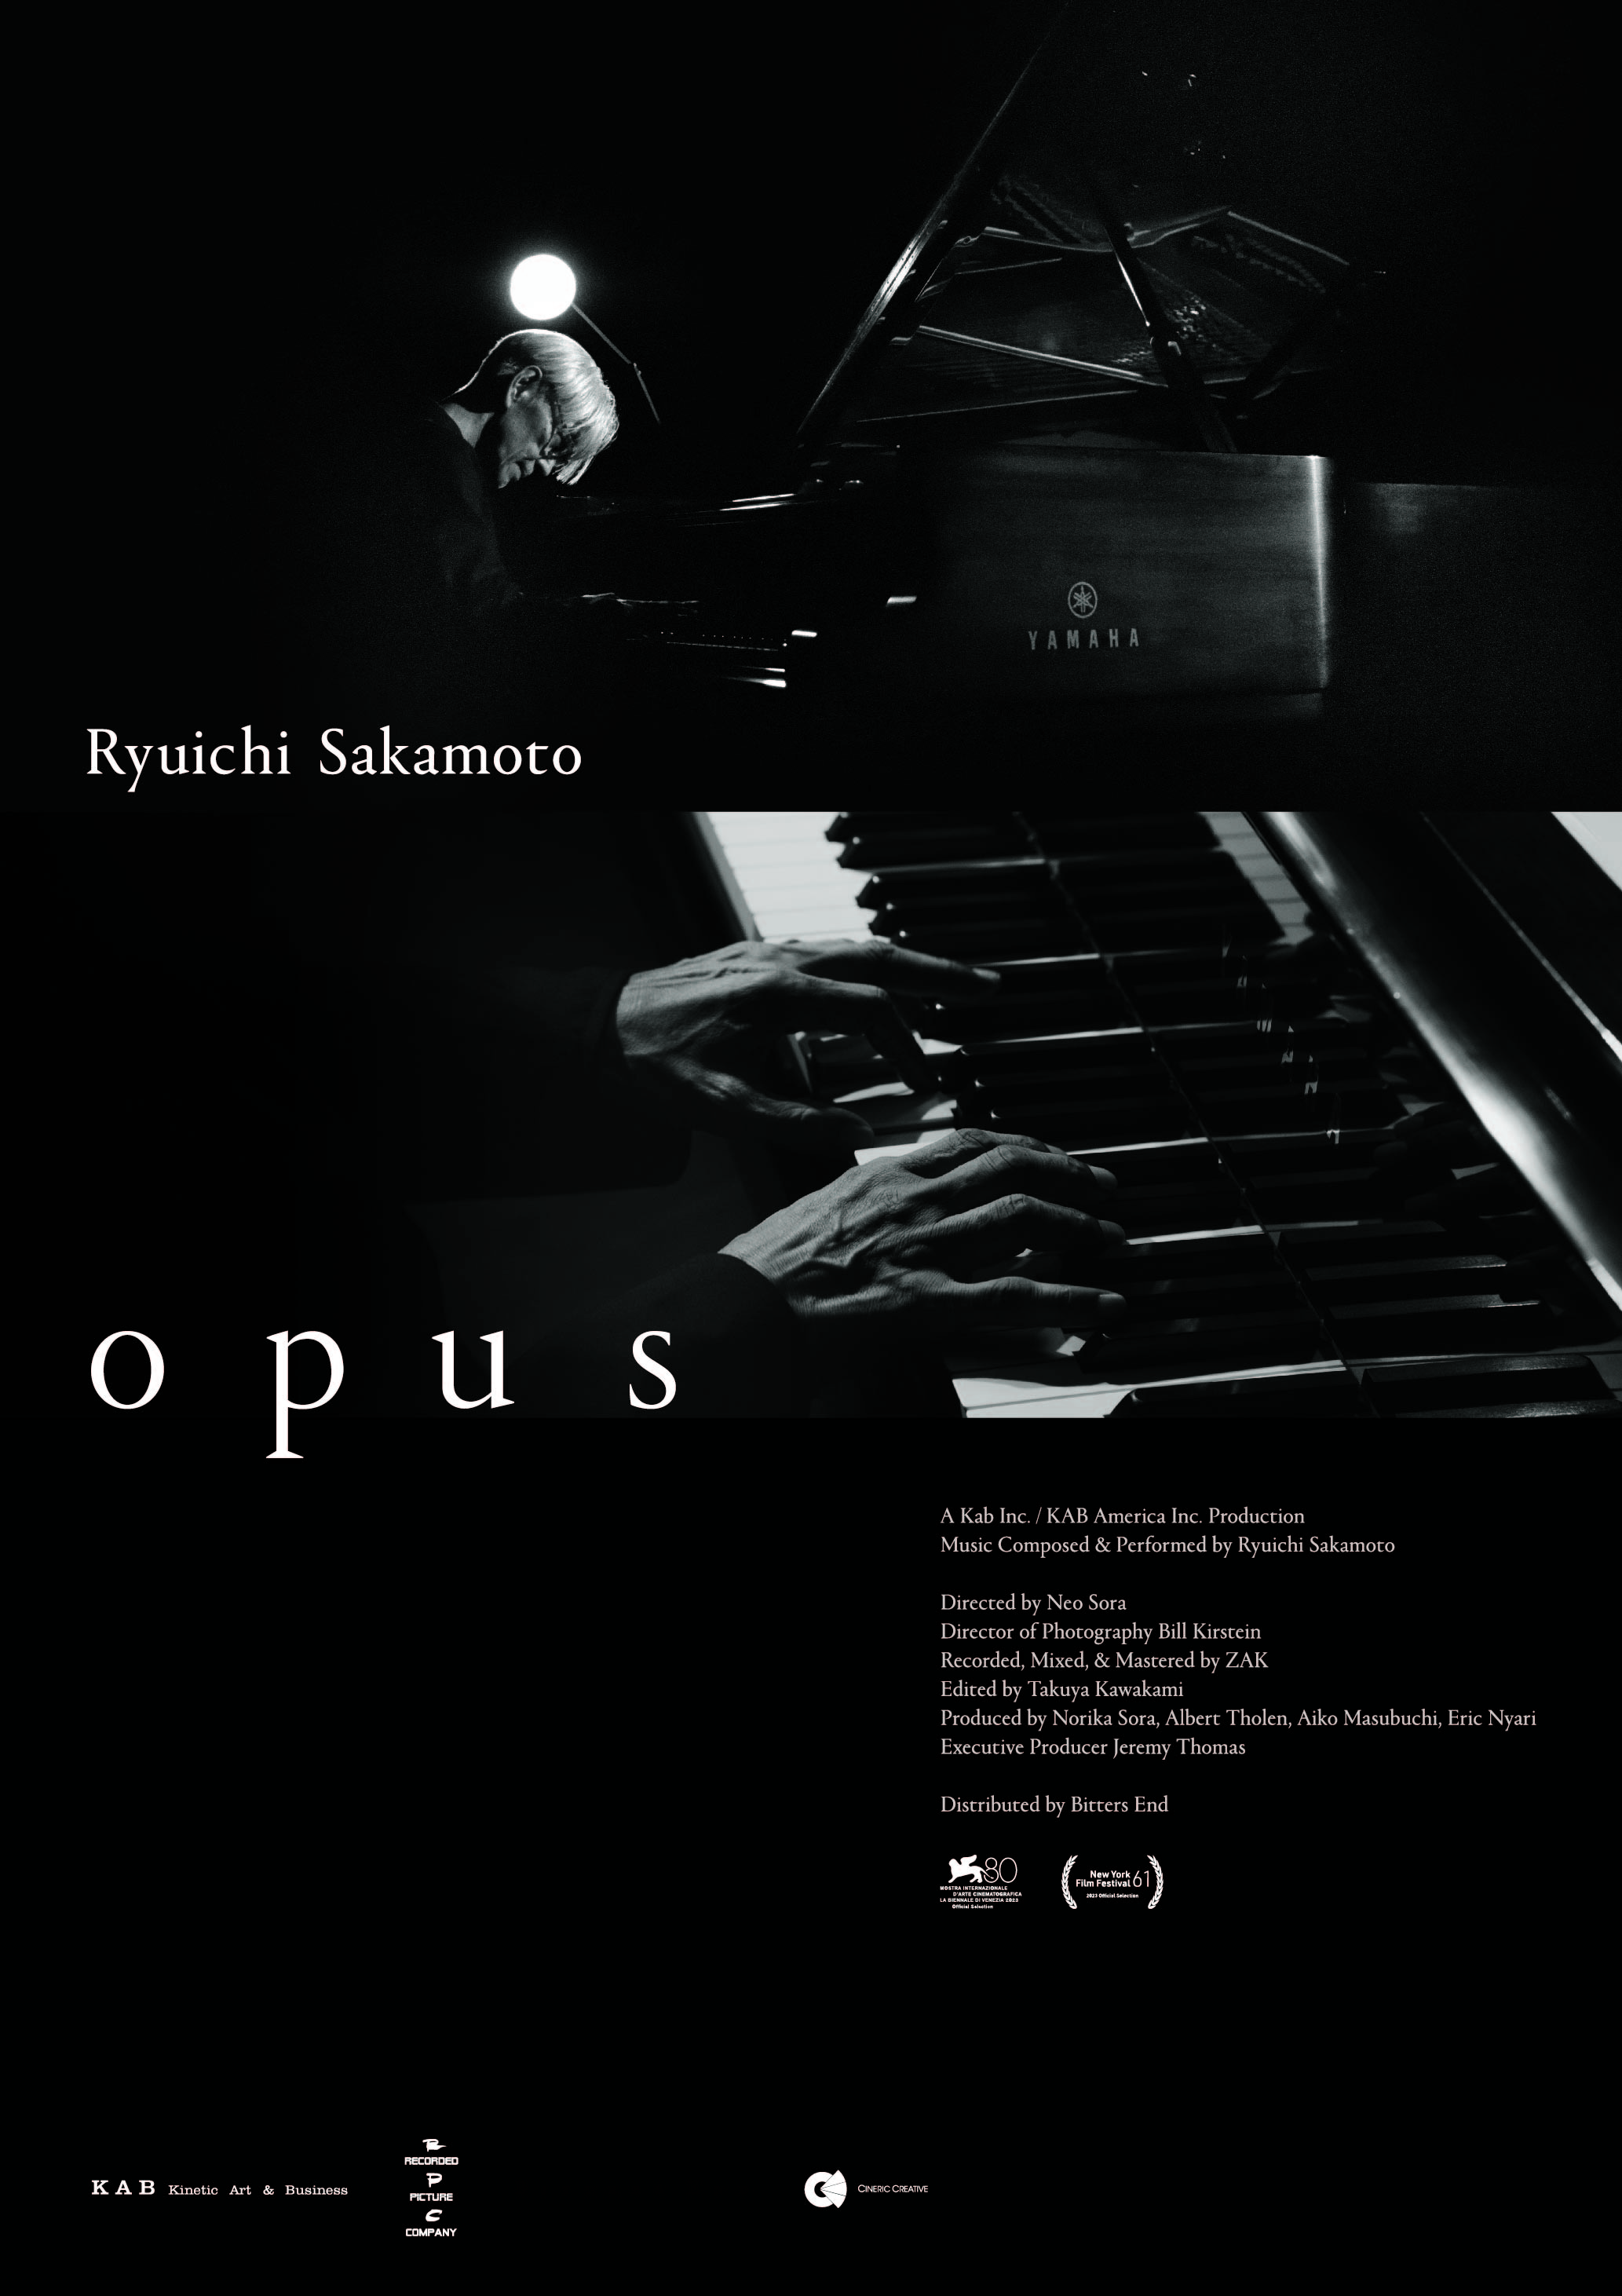 「Ryuichi Sakamoto | Opus」